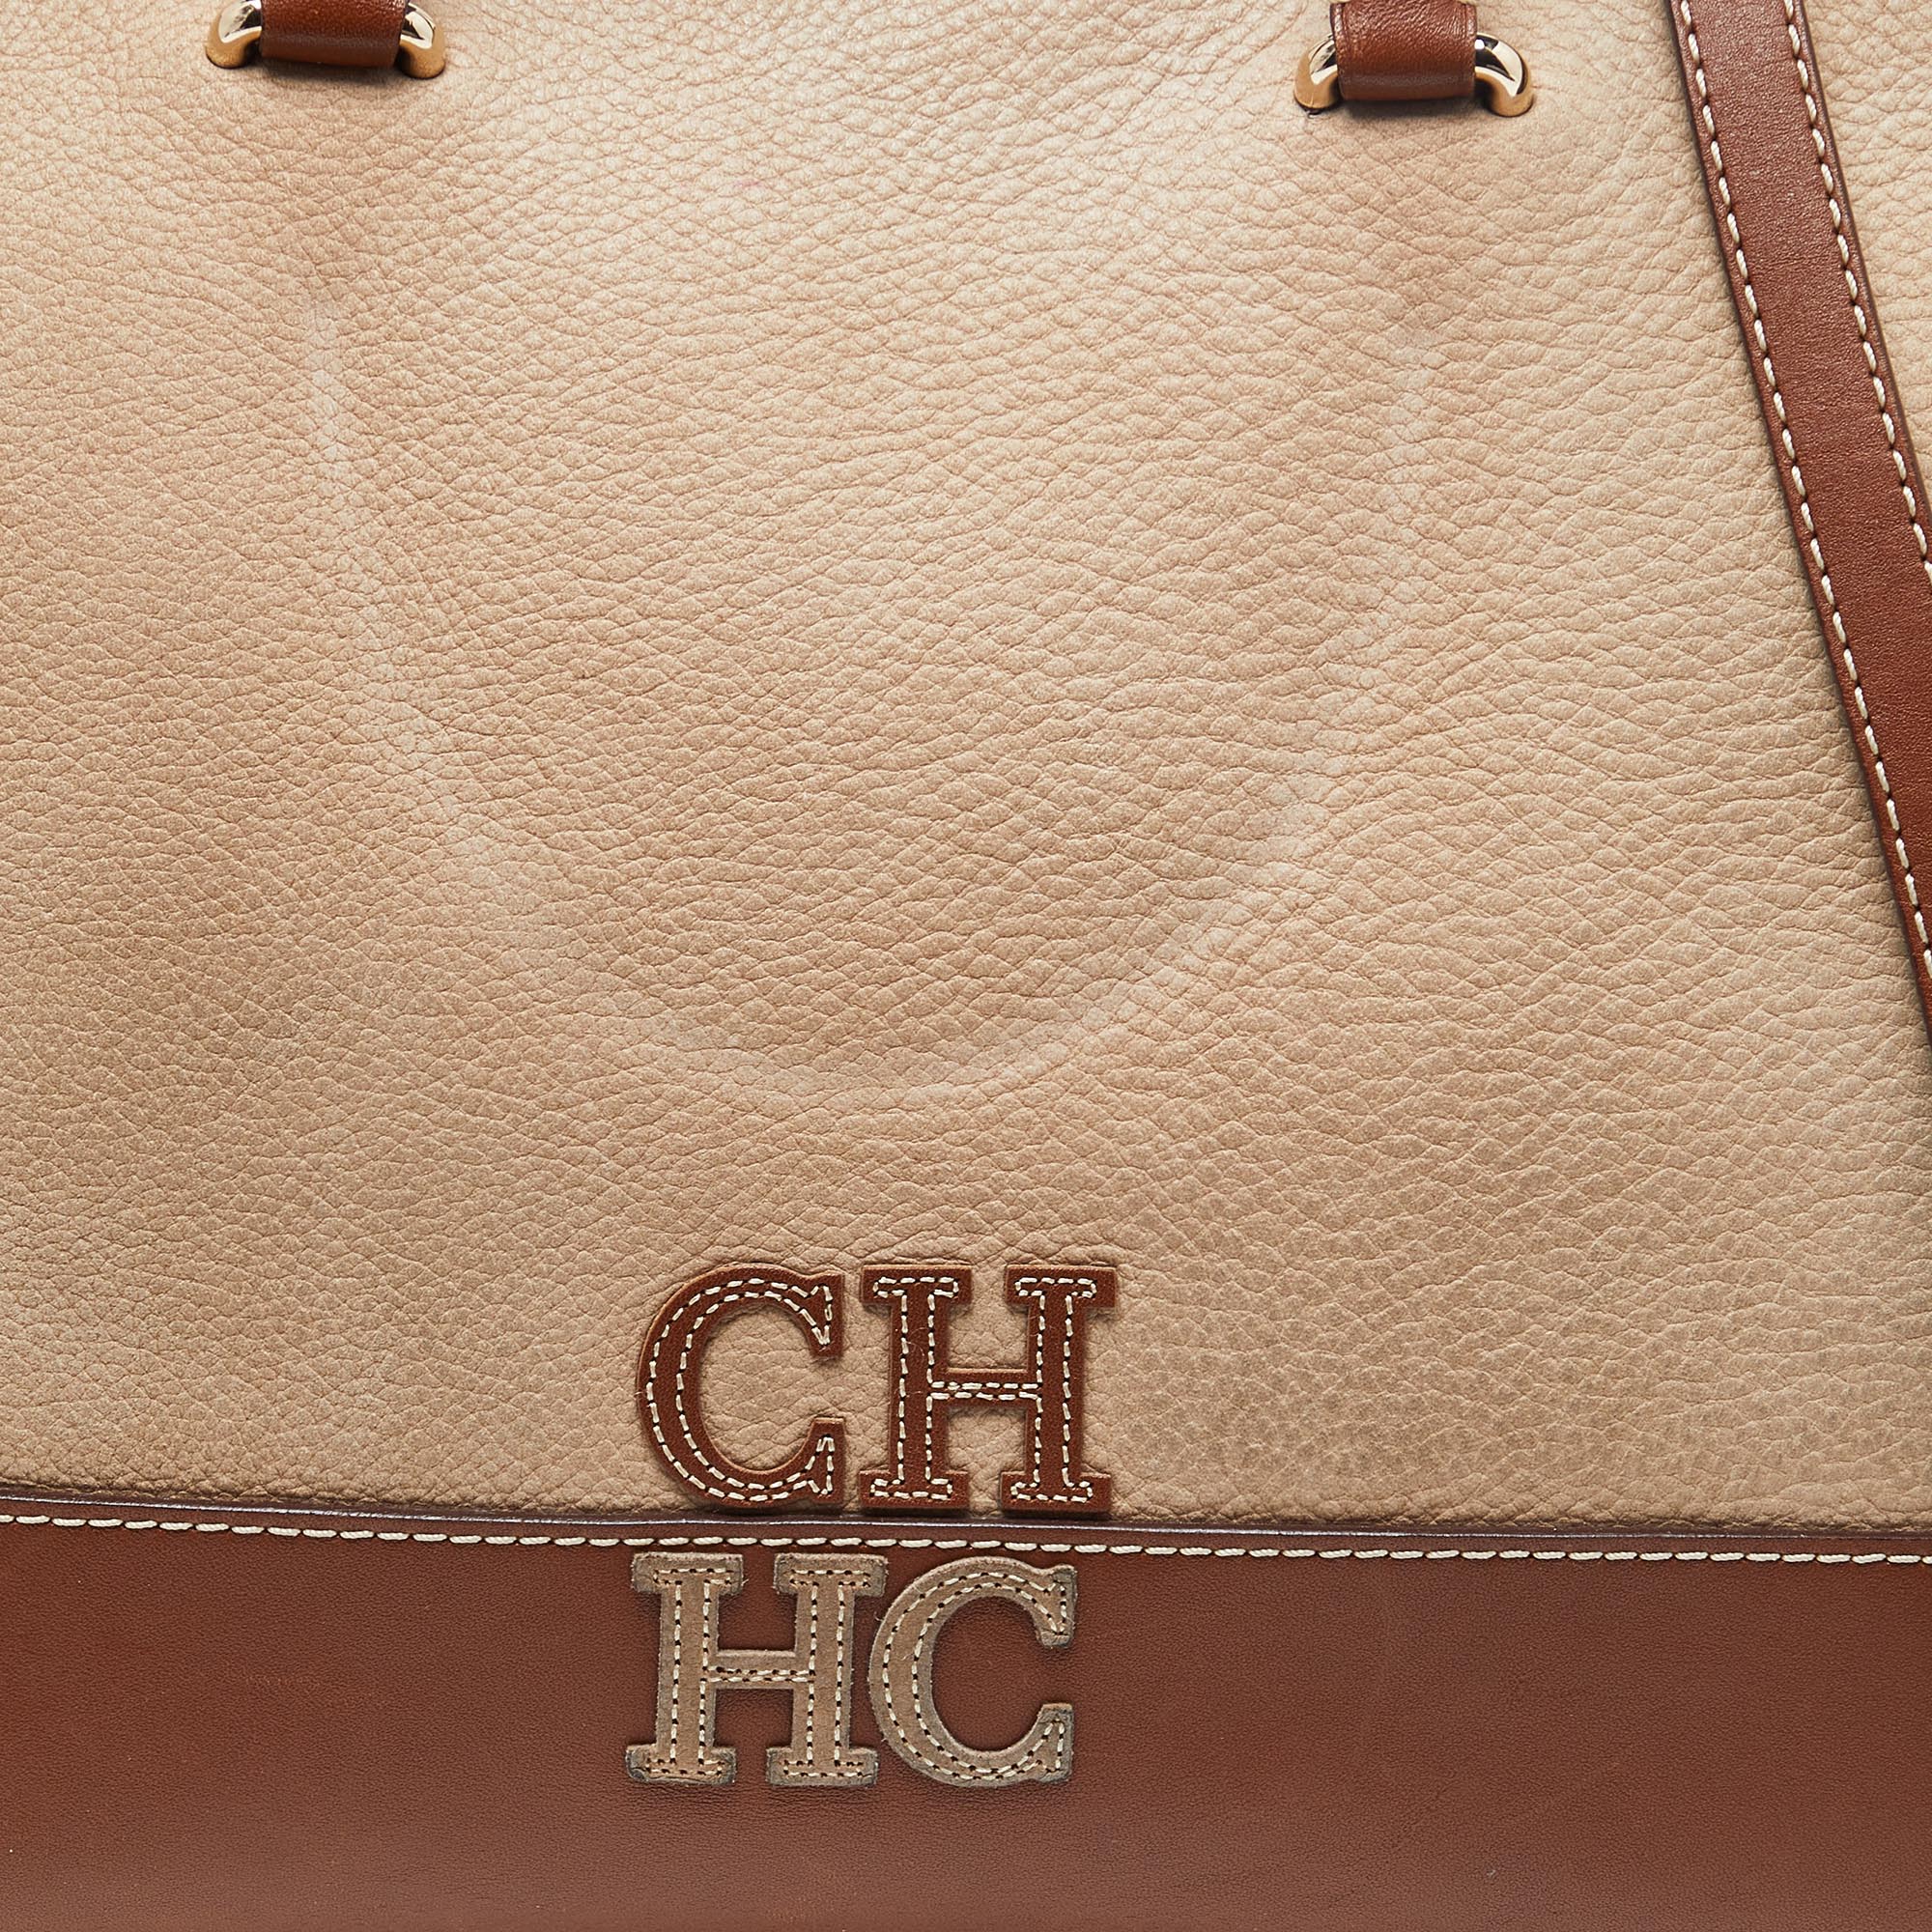 CH Carolina Herrera Beige/Brown Pebbled Leather Satchel